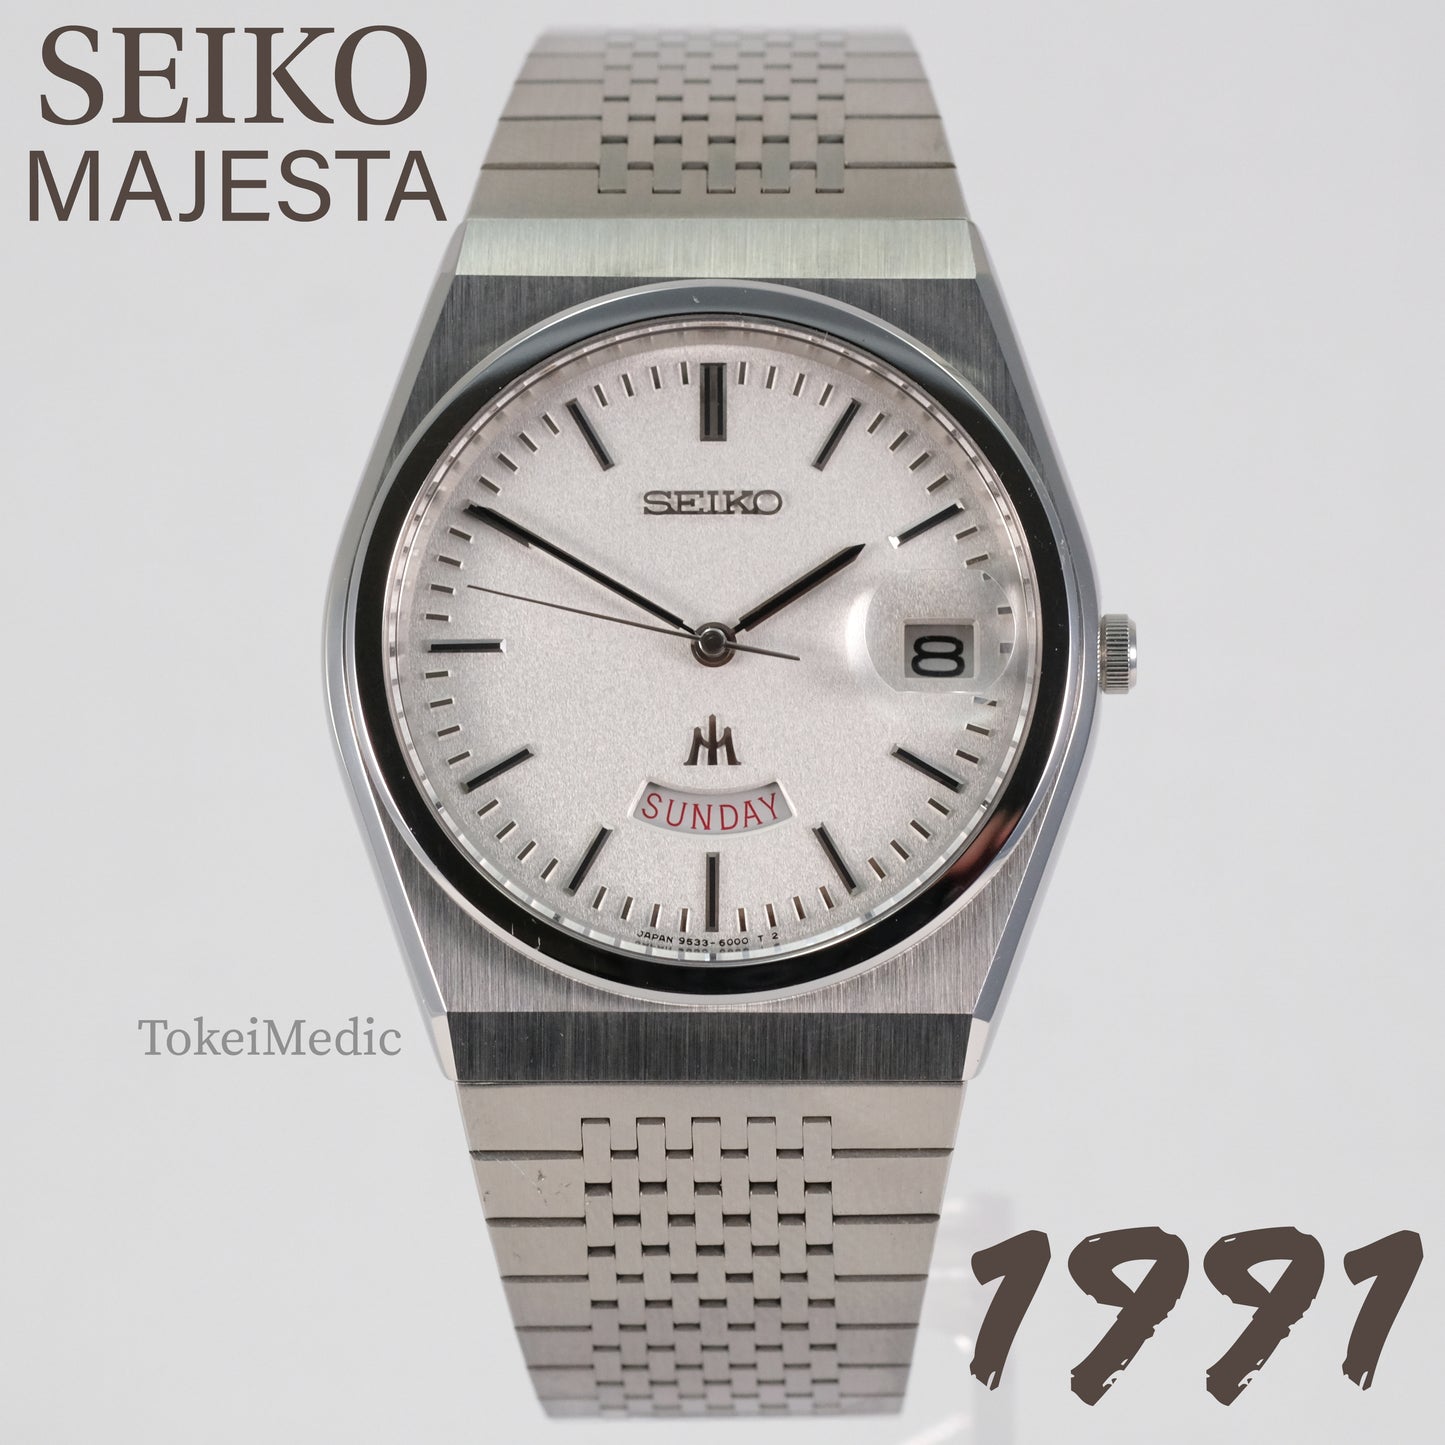 1991 Seiko Majesta 9533-6000